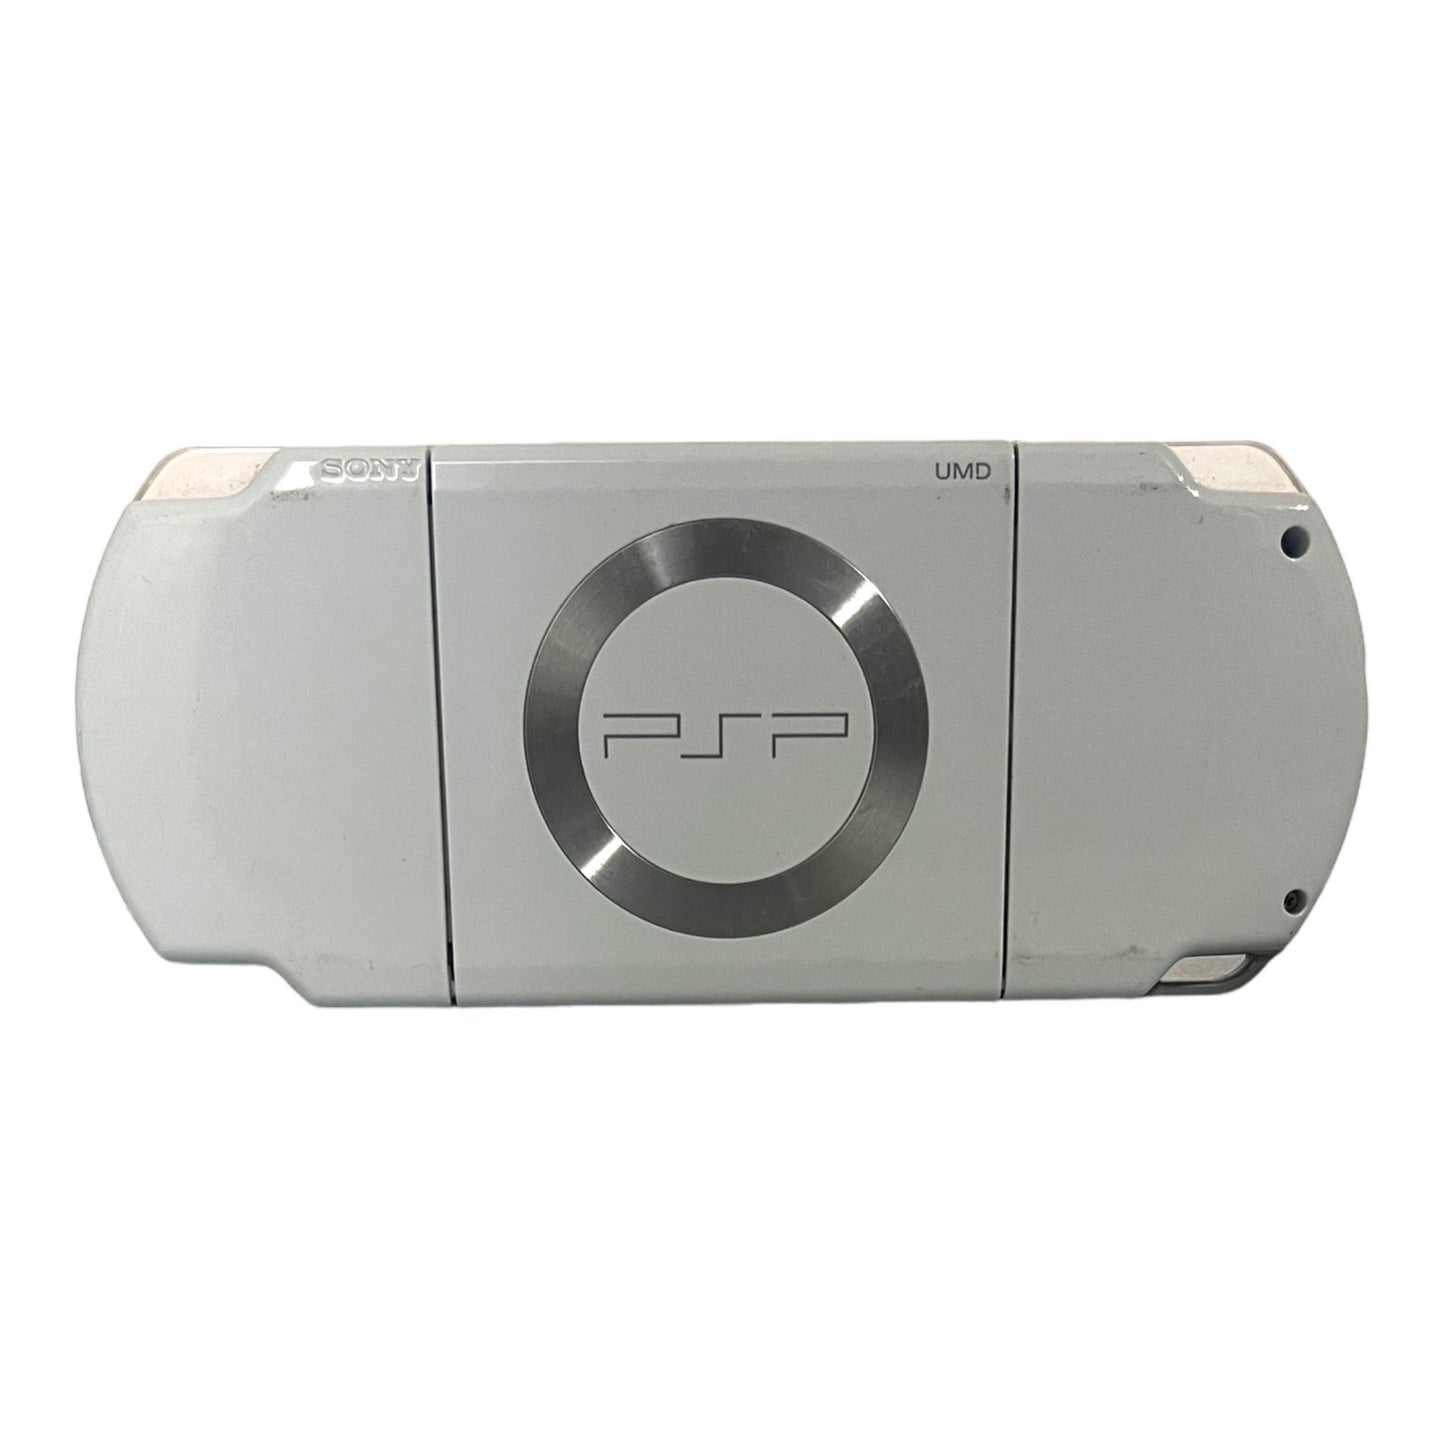 PlayStation Portable PSP Ceramic White